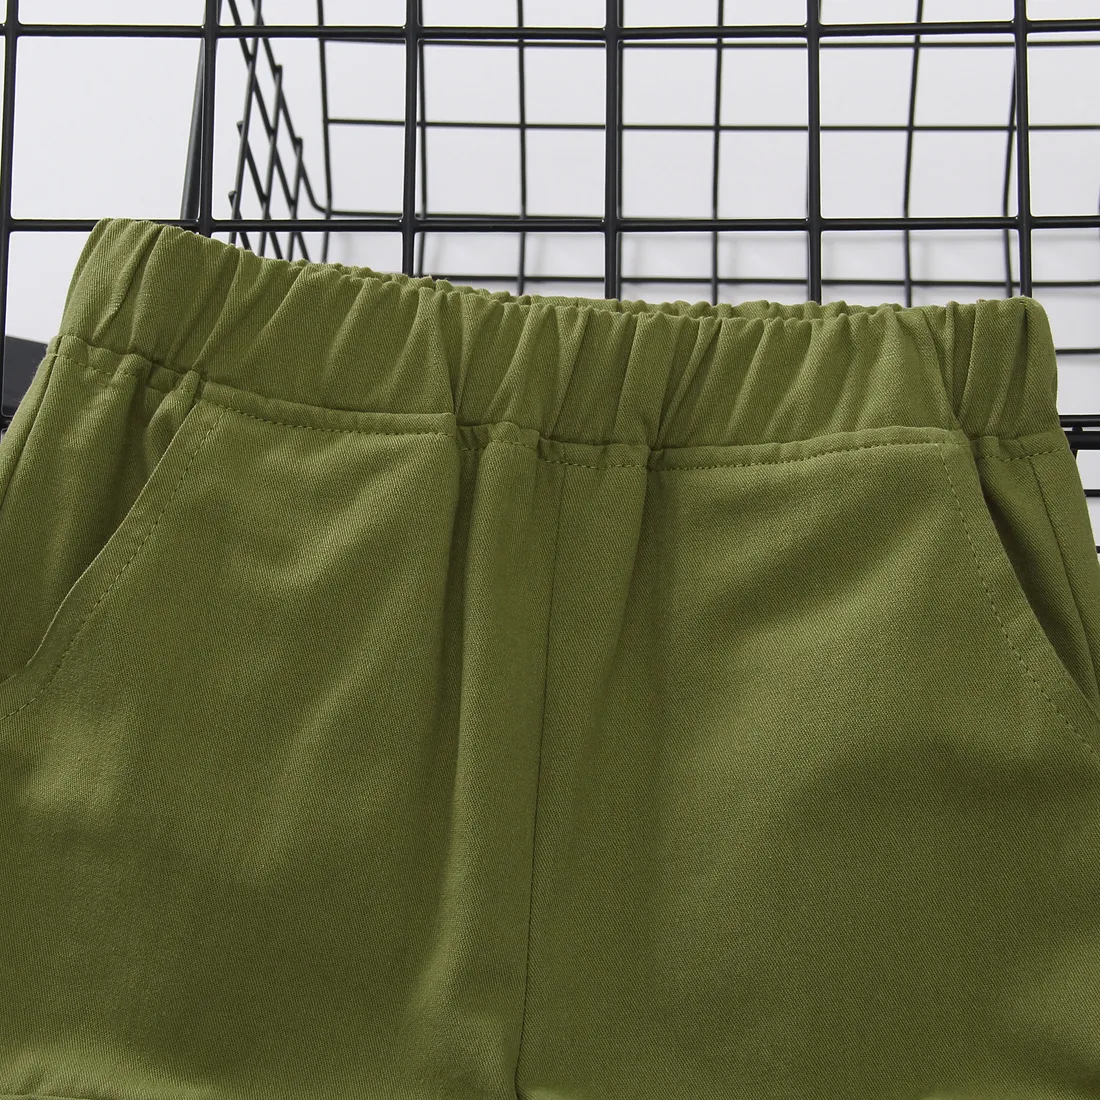 pantalon kaki à la mode pour garçon tout-petit Armée Verte big image 1